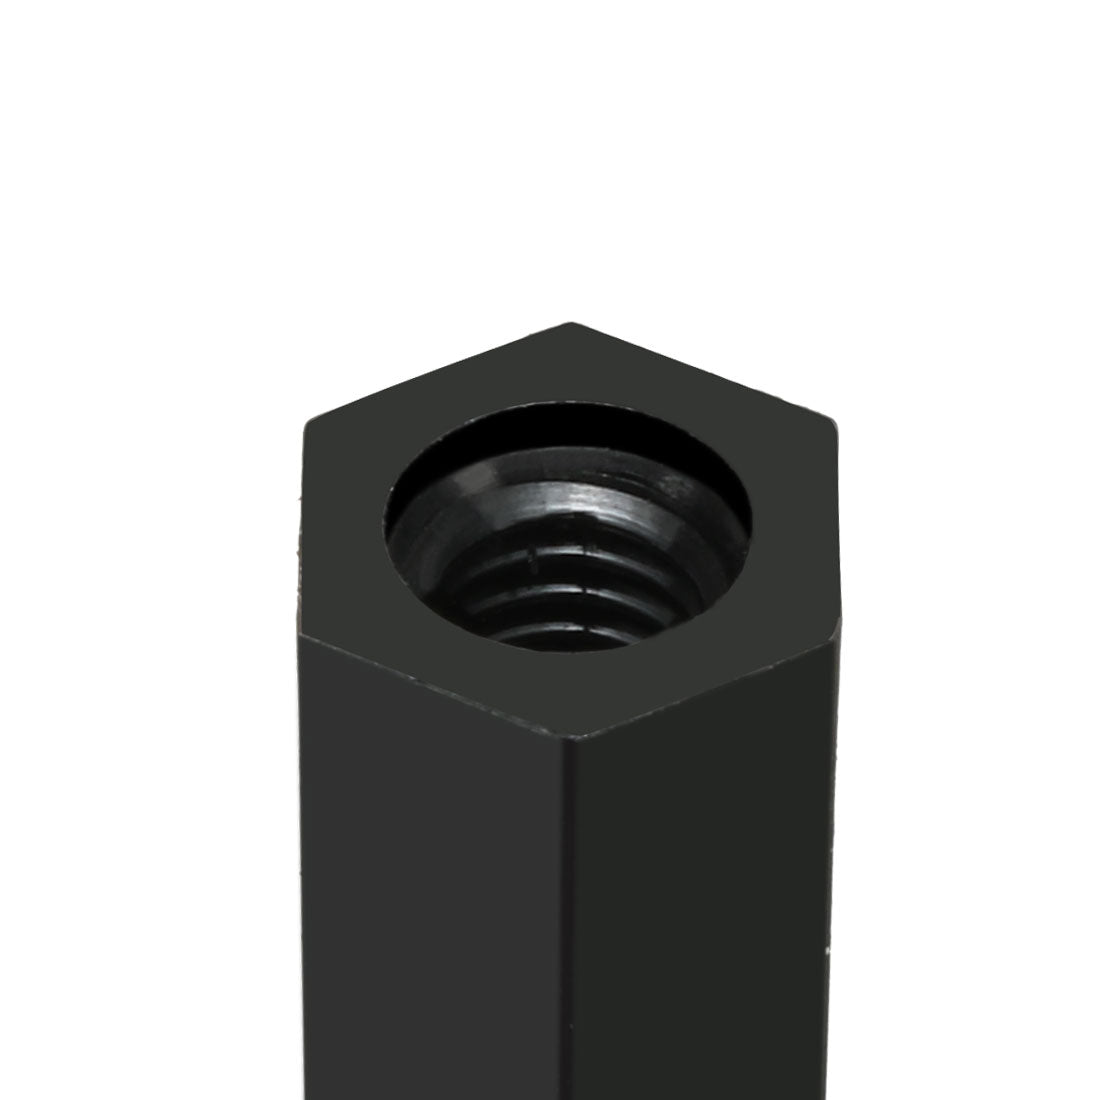 uxcell Uxcell 100pcs M4 30+6mm Male Thread Nylon Hex Standoff Spacer Screws PCB Pillar Black